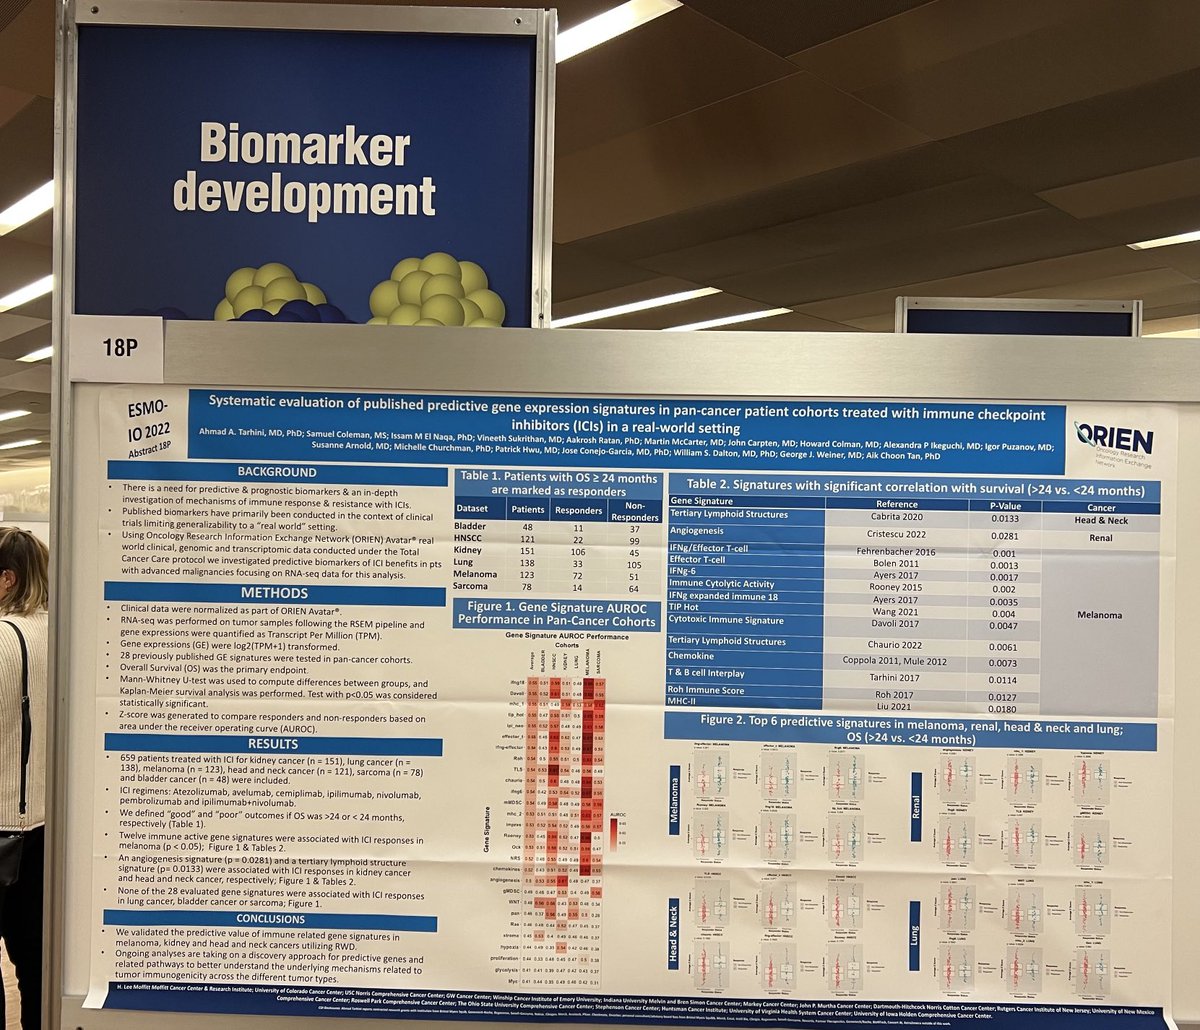 #ESMOImmuno22 #Geneva Pleasure to present LIVE #biomarker Team #Science data #ORIEN
⁦@MoffittNews⁩ @OSUCCC_James⁩ ⁦⁦@UVACancerCenter⁩ @UIowaCancer ⁦@GWCancer⁩ @UNMCCC @IU_Health @UKMarkey @RutgersCancer @uscnorris @StephensonCC @RoswellPark @IU_Health